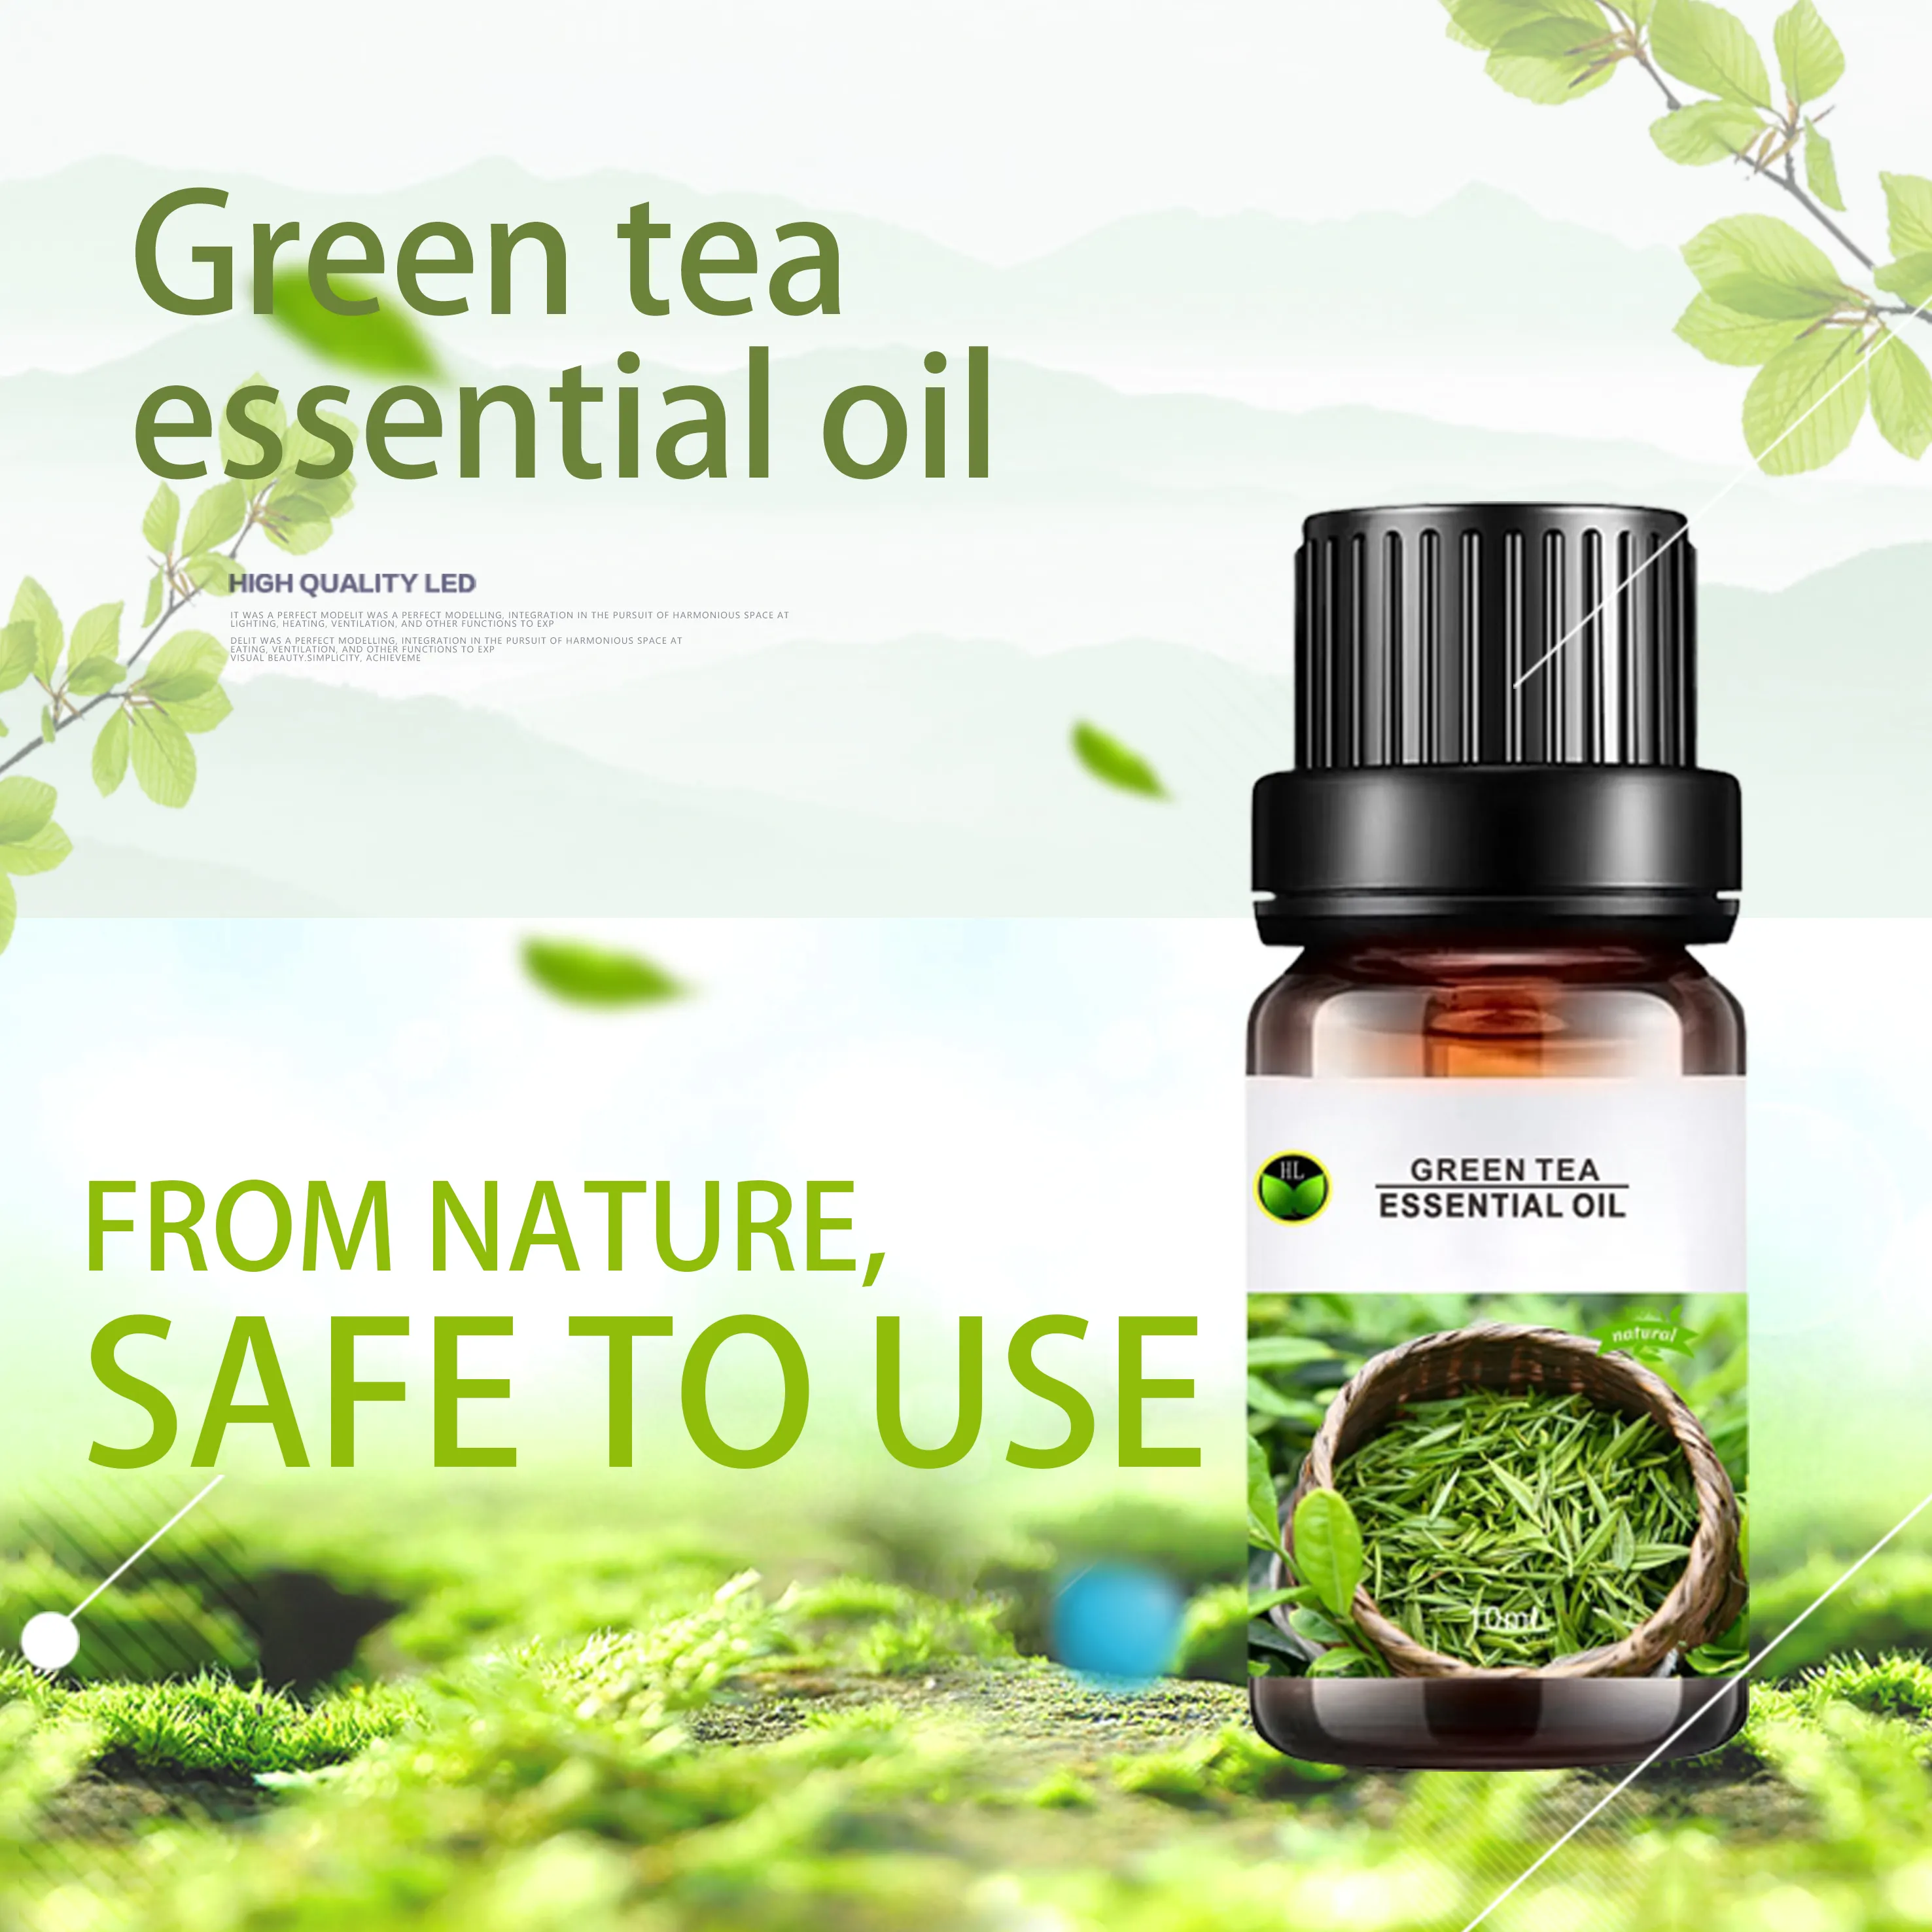 Bulk Natural Body Oils Manufacturer, Wholesale Organic Chinese Green Tea Oil for Skin, Hair, Face Care |Not- Australian tea tree